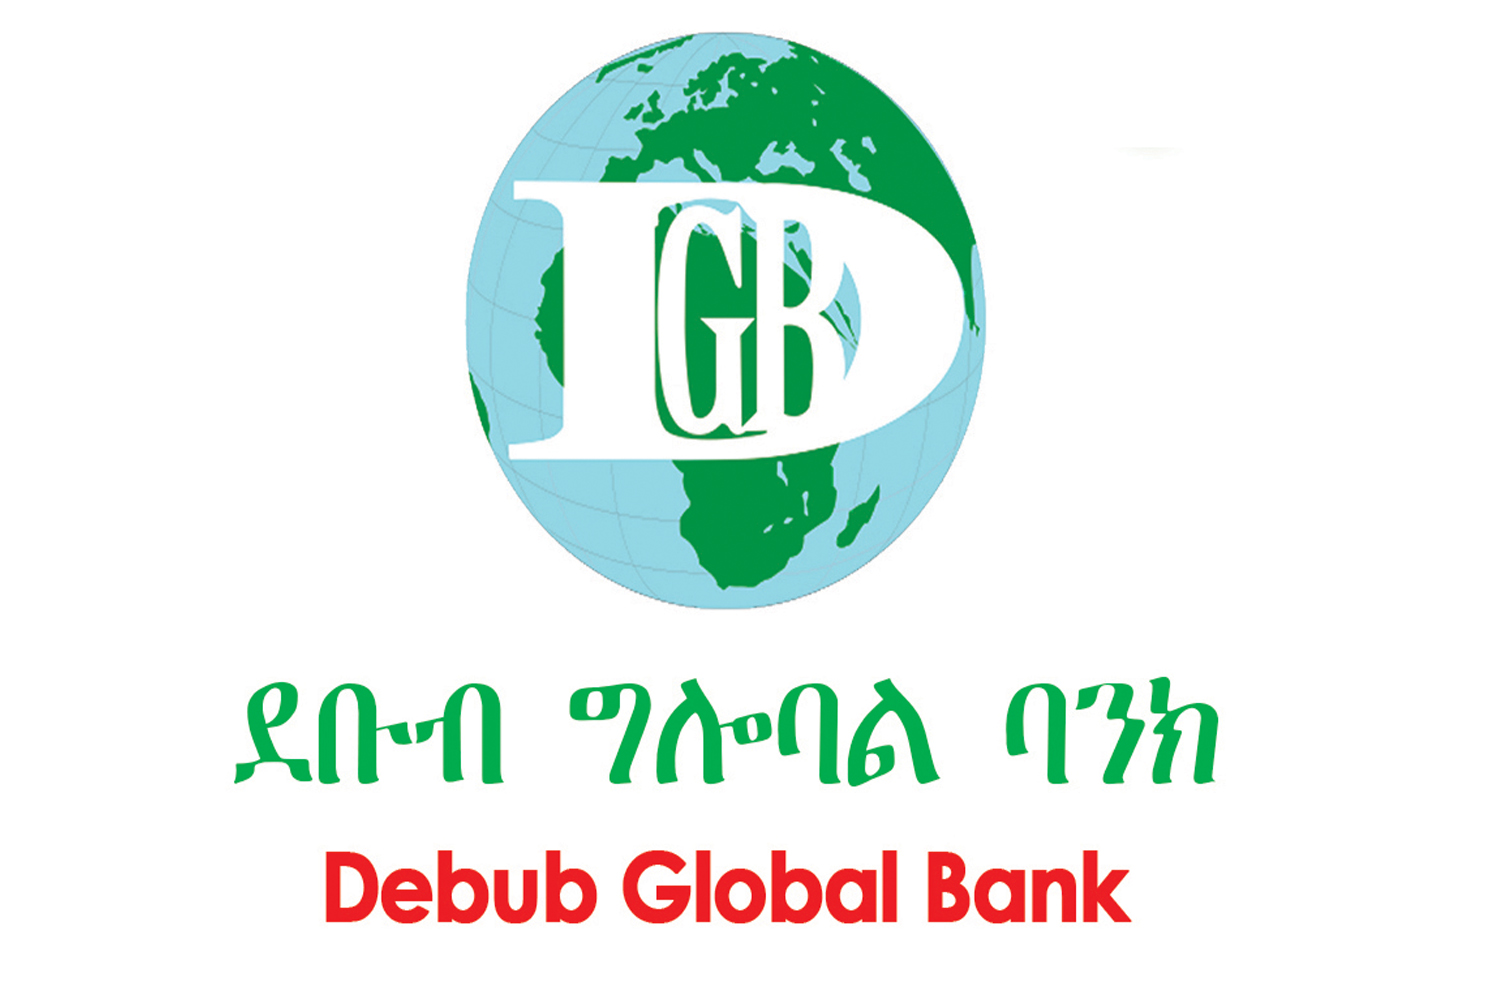 Debub Global Bank doubles profits - Capital Newspaper